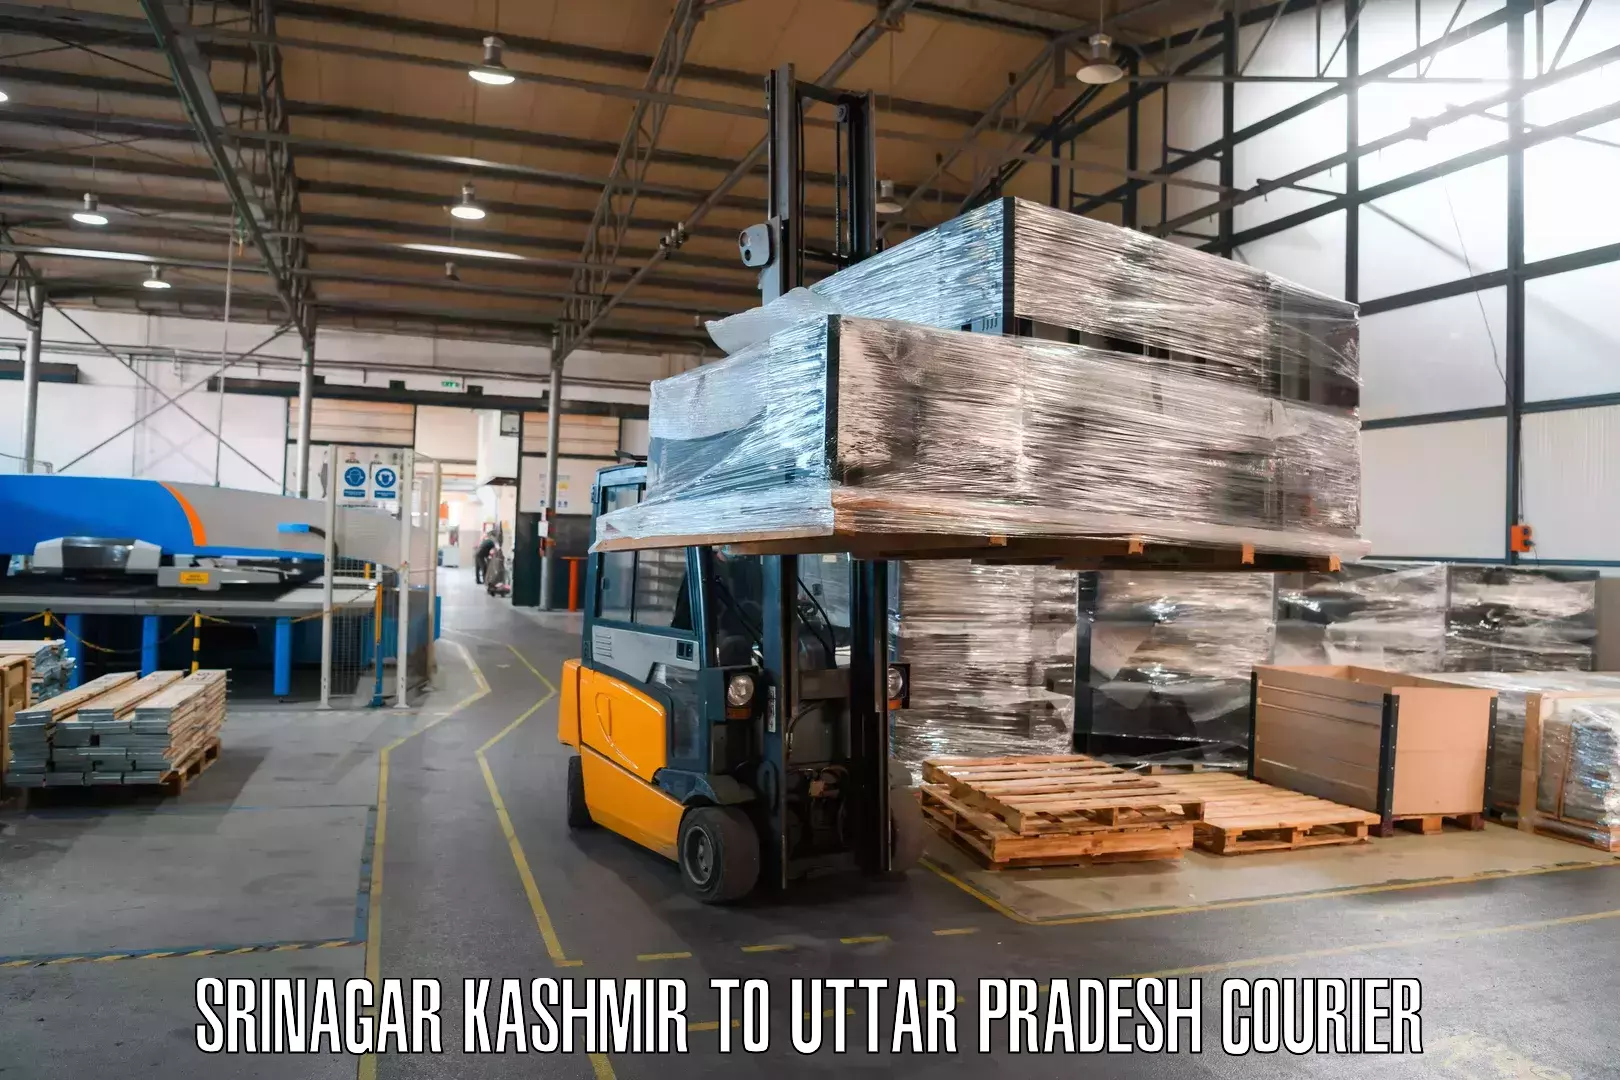 Courier service booking Srinagar Kashmir to Khurja